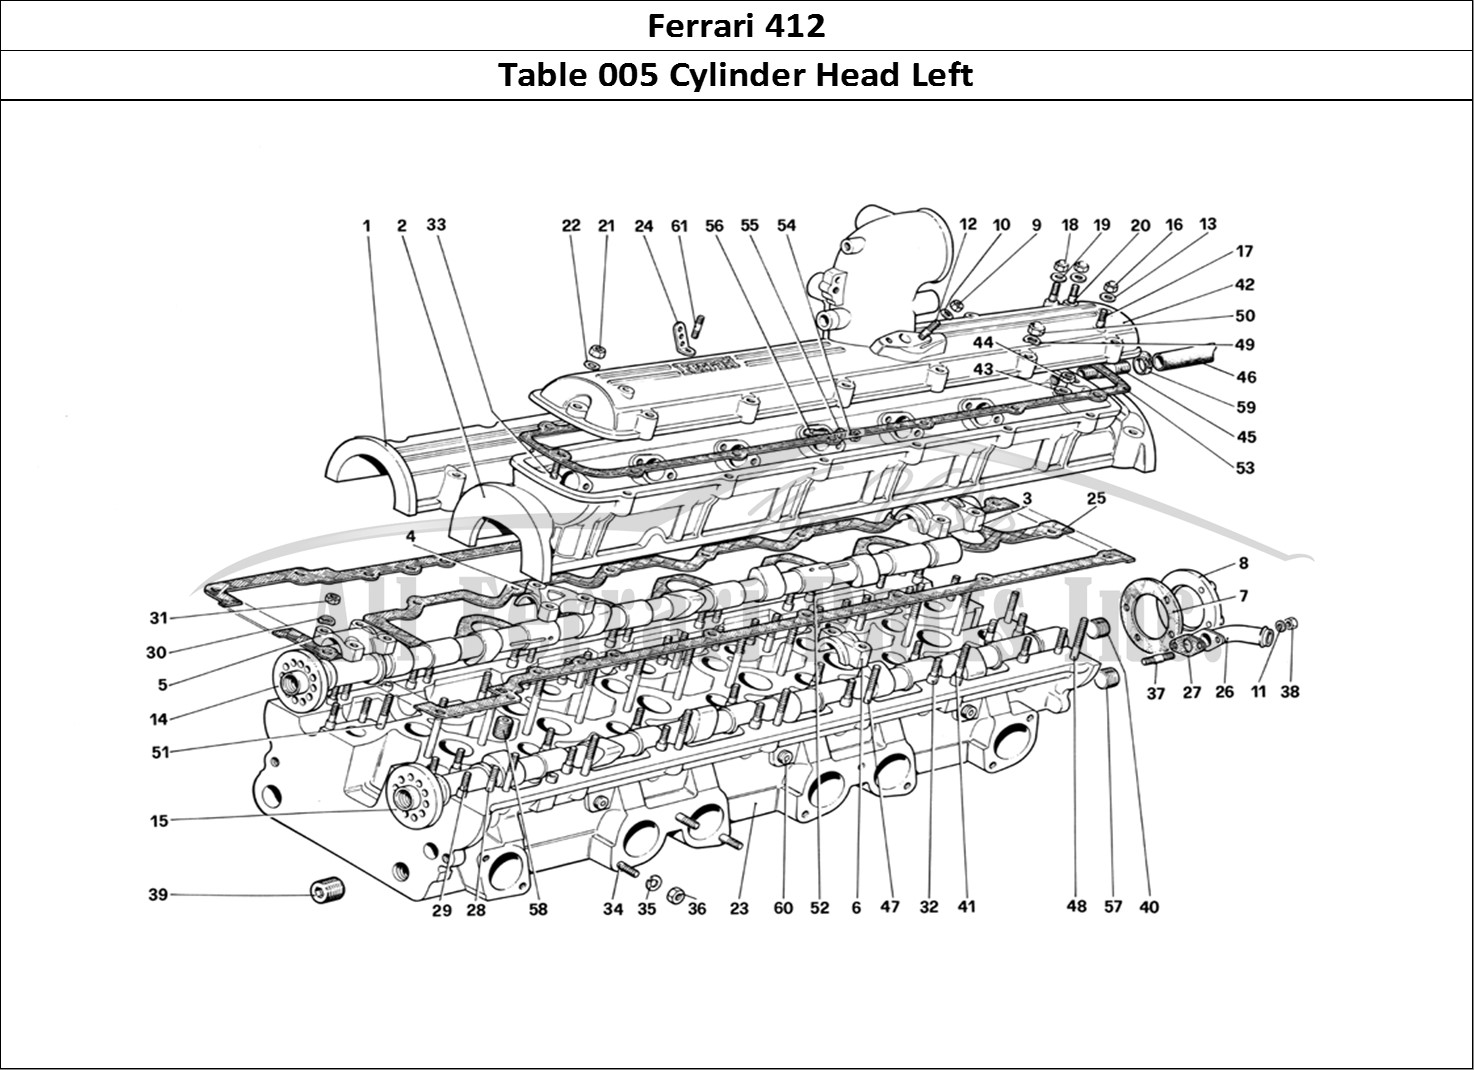 Ferrari Parts Ferrari 412 (Mechanical) Page 005 Cylinder Head (Left)